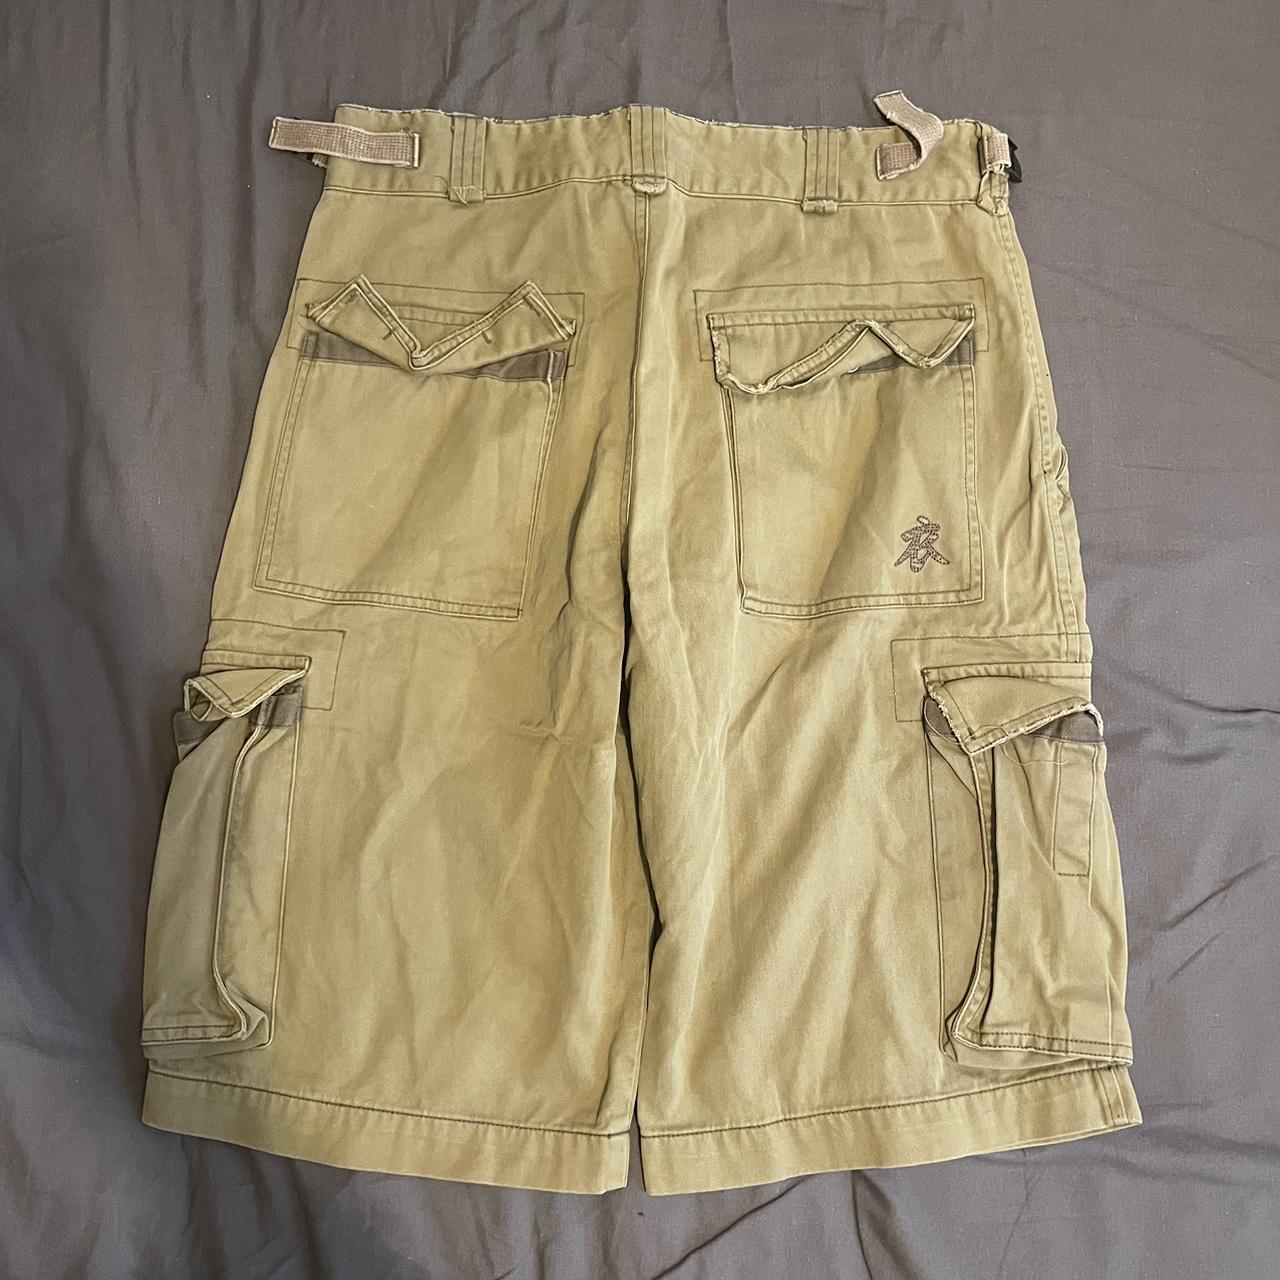 Baggy 3/4 length shorts jorts cargo shorts Great... - Depop